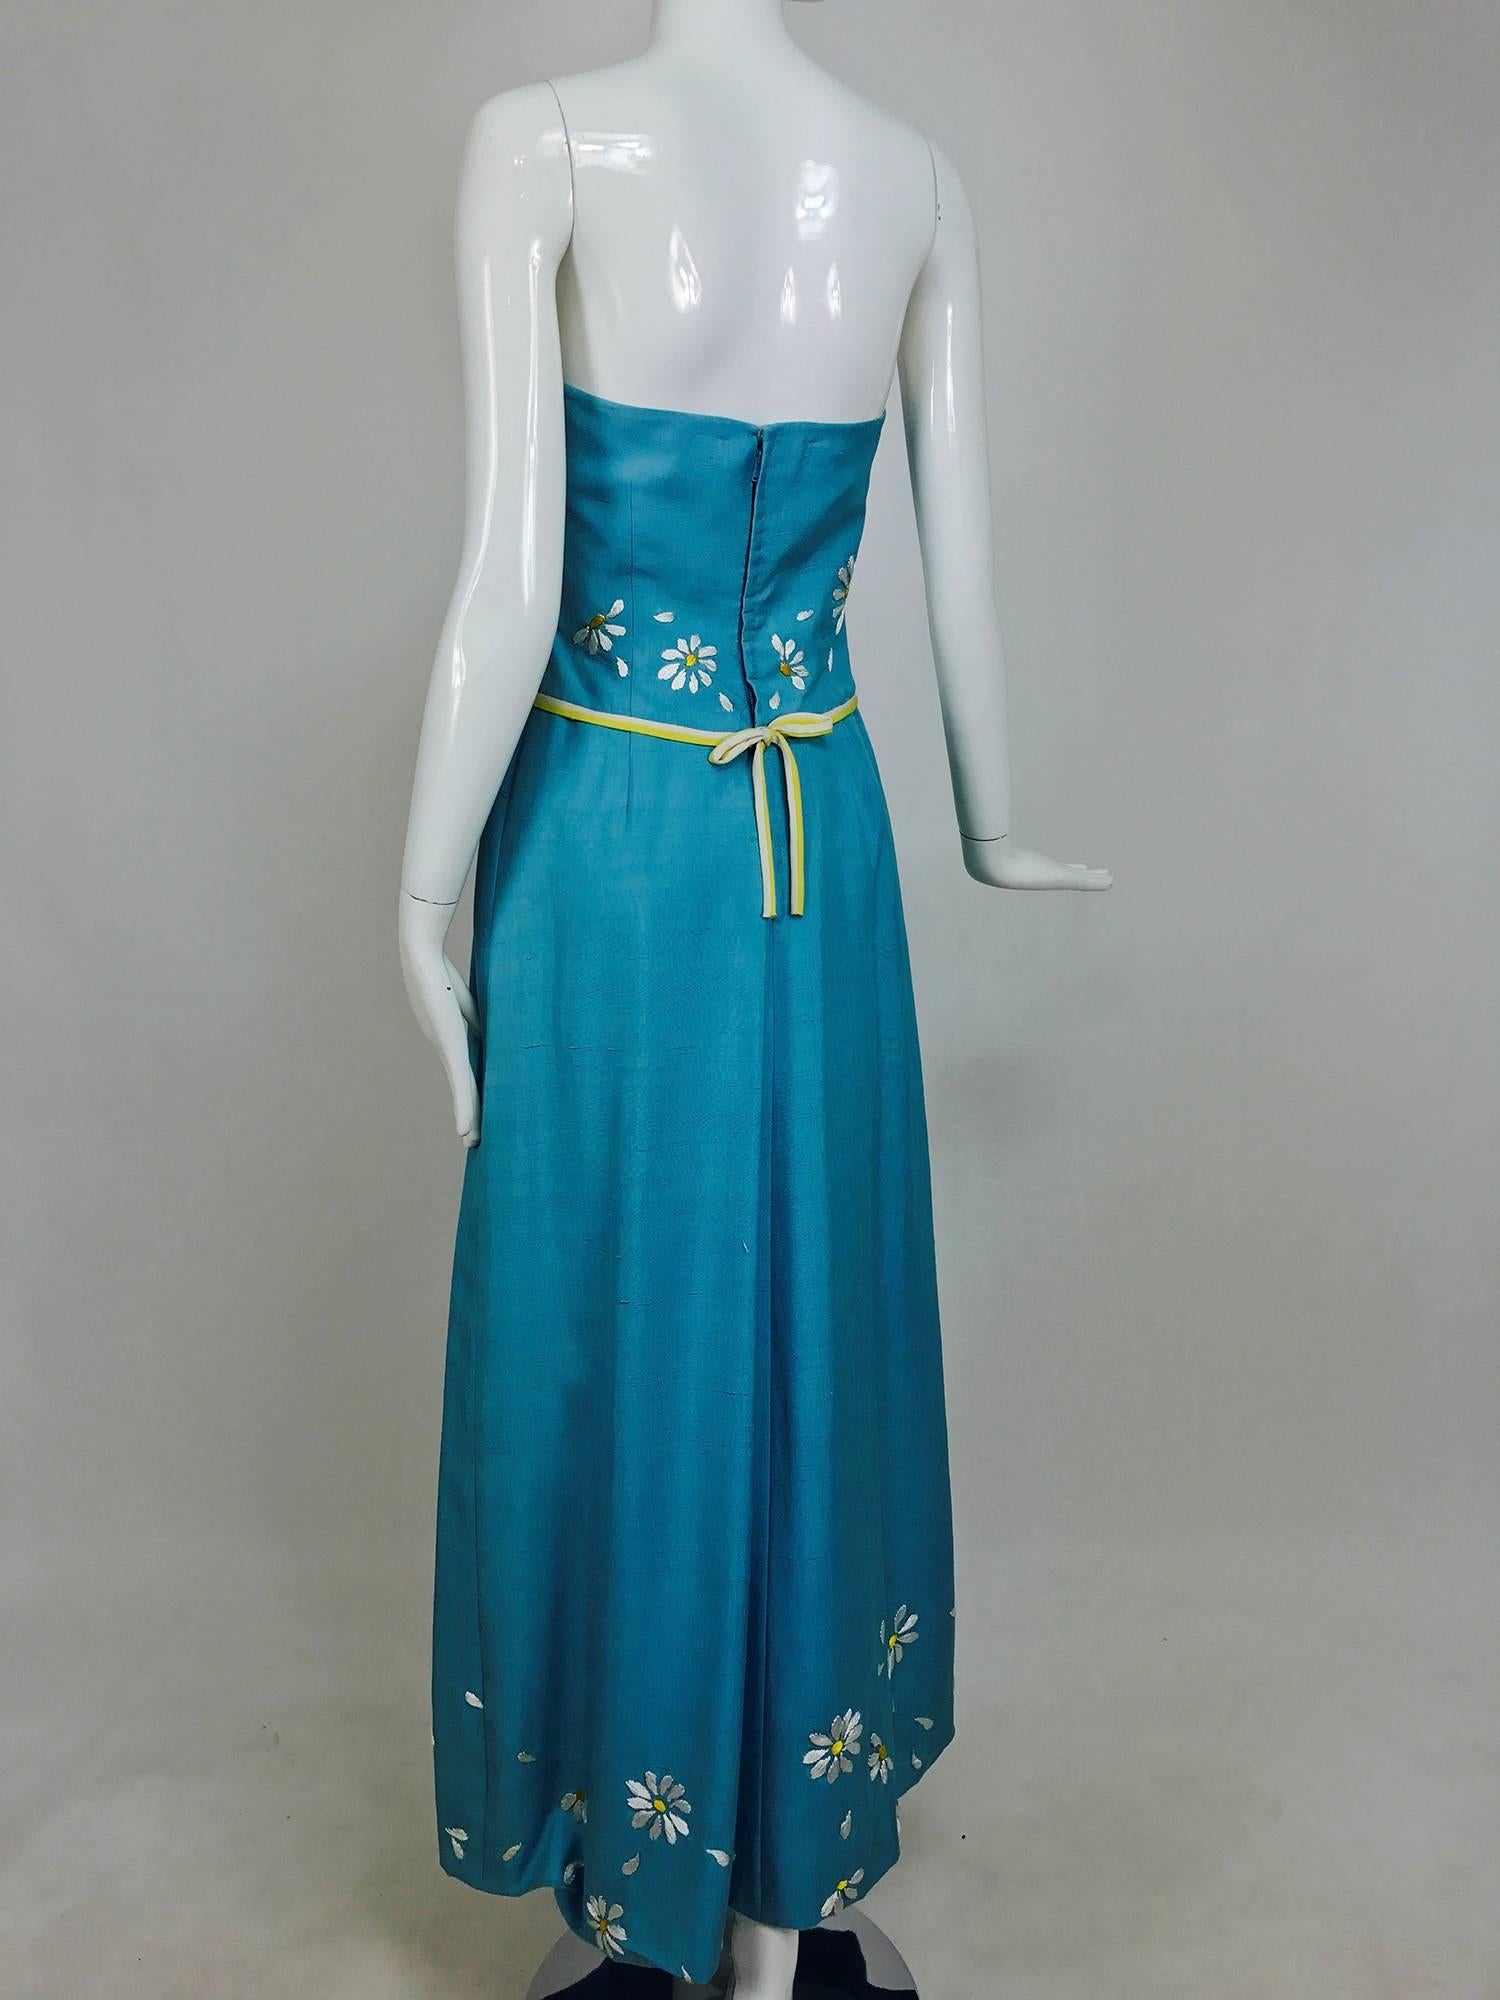 Vintage Philip Hulitar daisy embroidered blue slub silk strapless gown 1950s 1